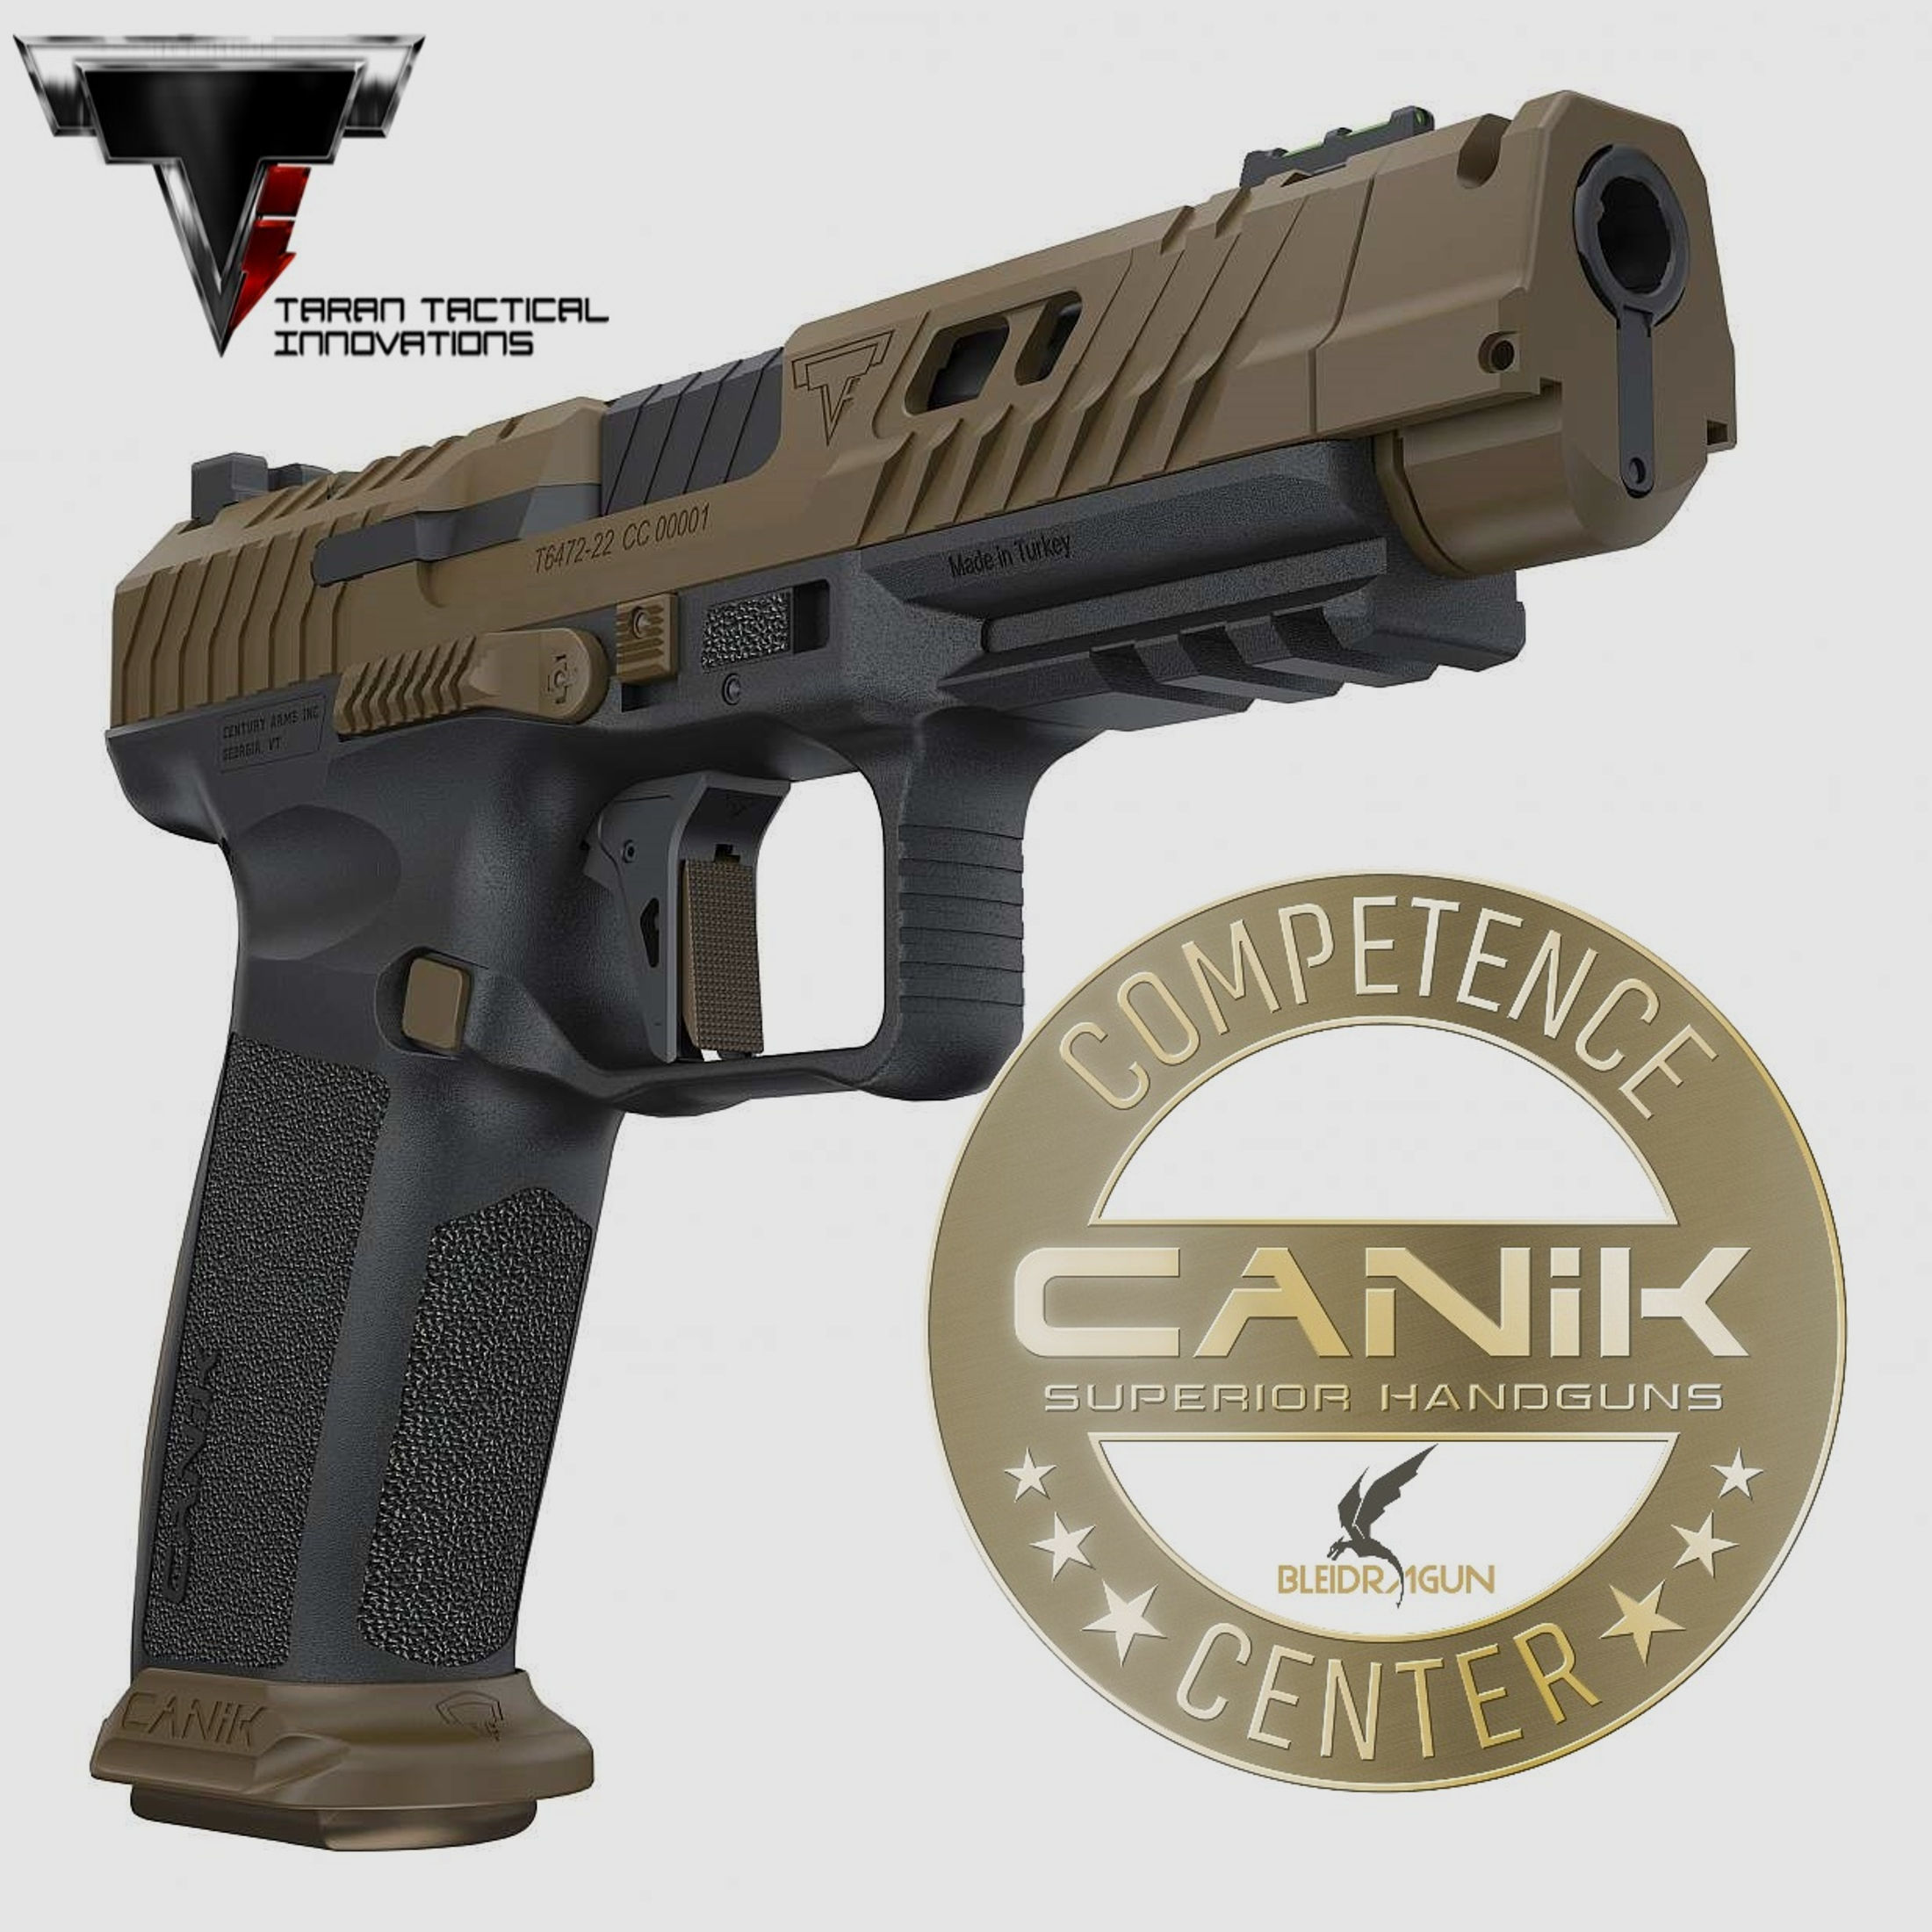 CANIC TTI COMBAT - Taran Tactical Innovations & Canik im Kaliber 9mm Luger